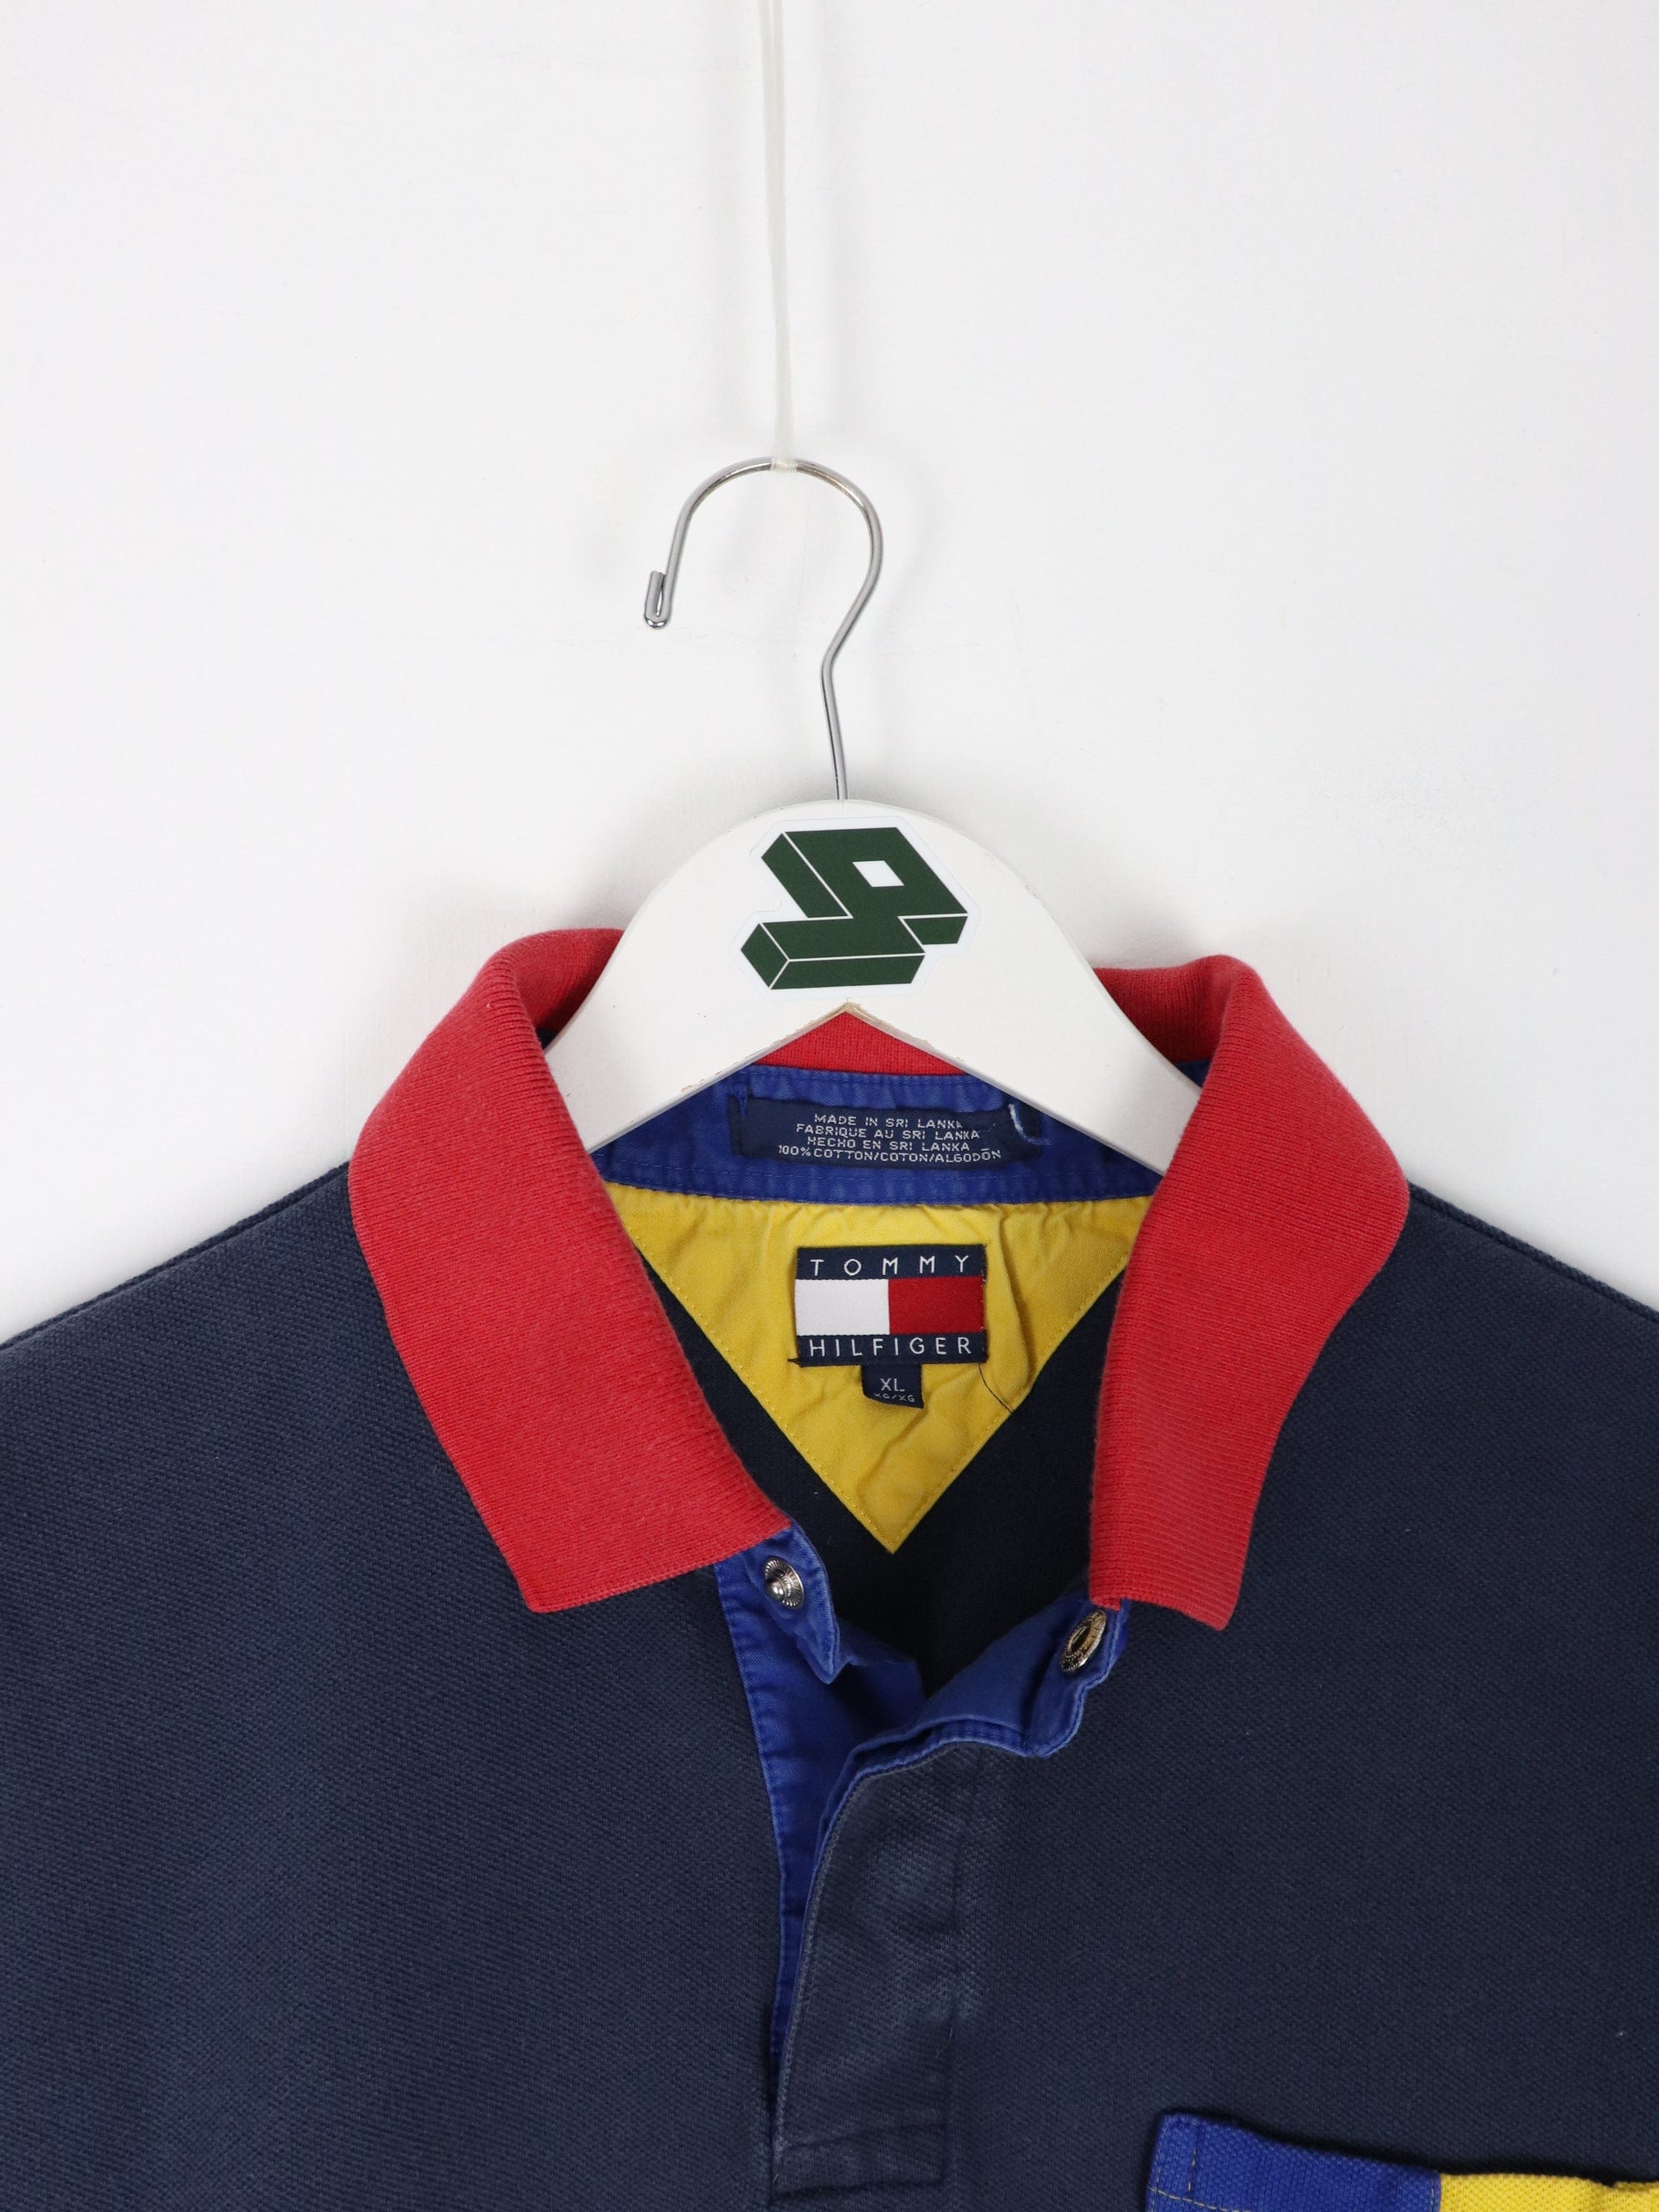 Vintage Tommy Hilfiger Polo Shirt Mens XL Blue Pocket 90s